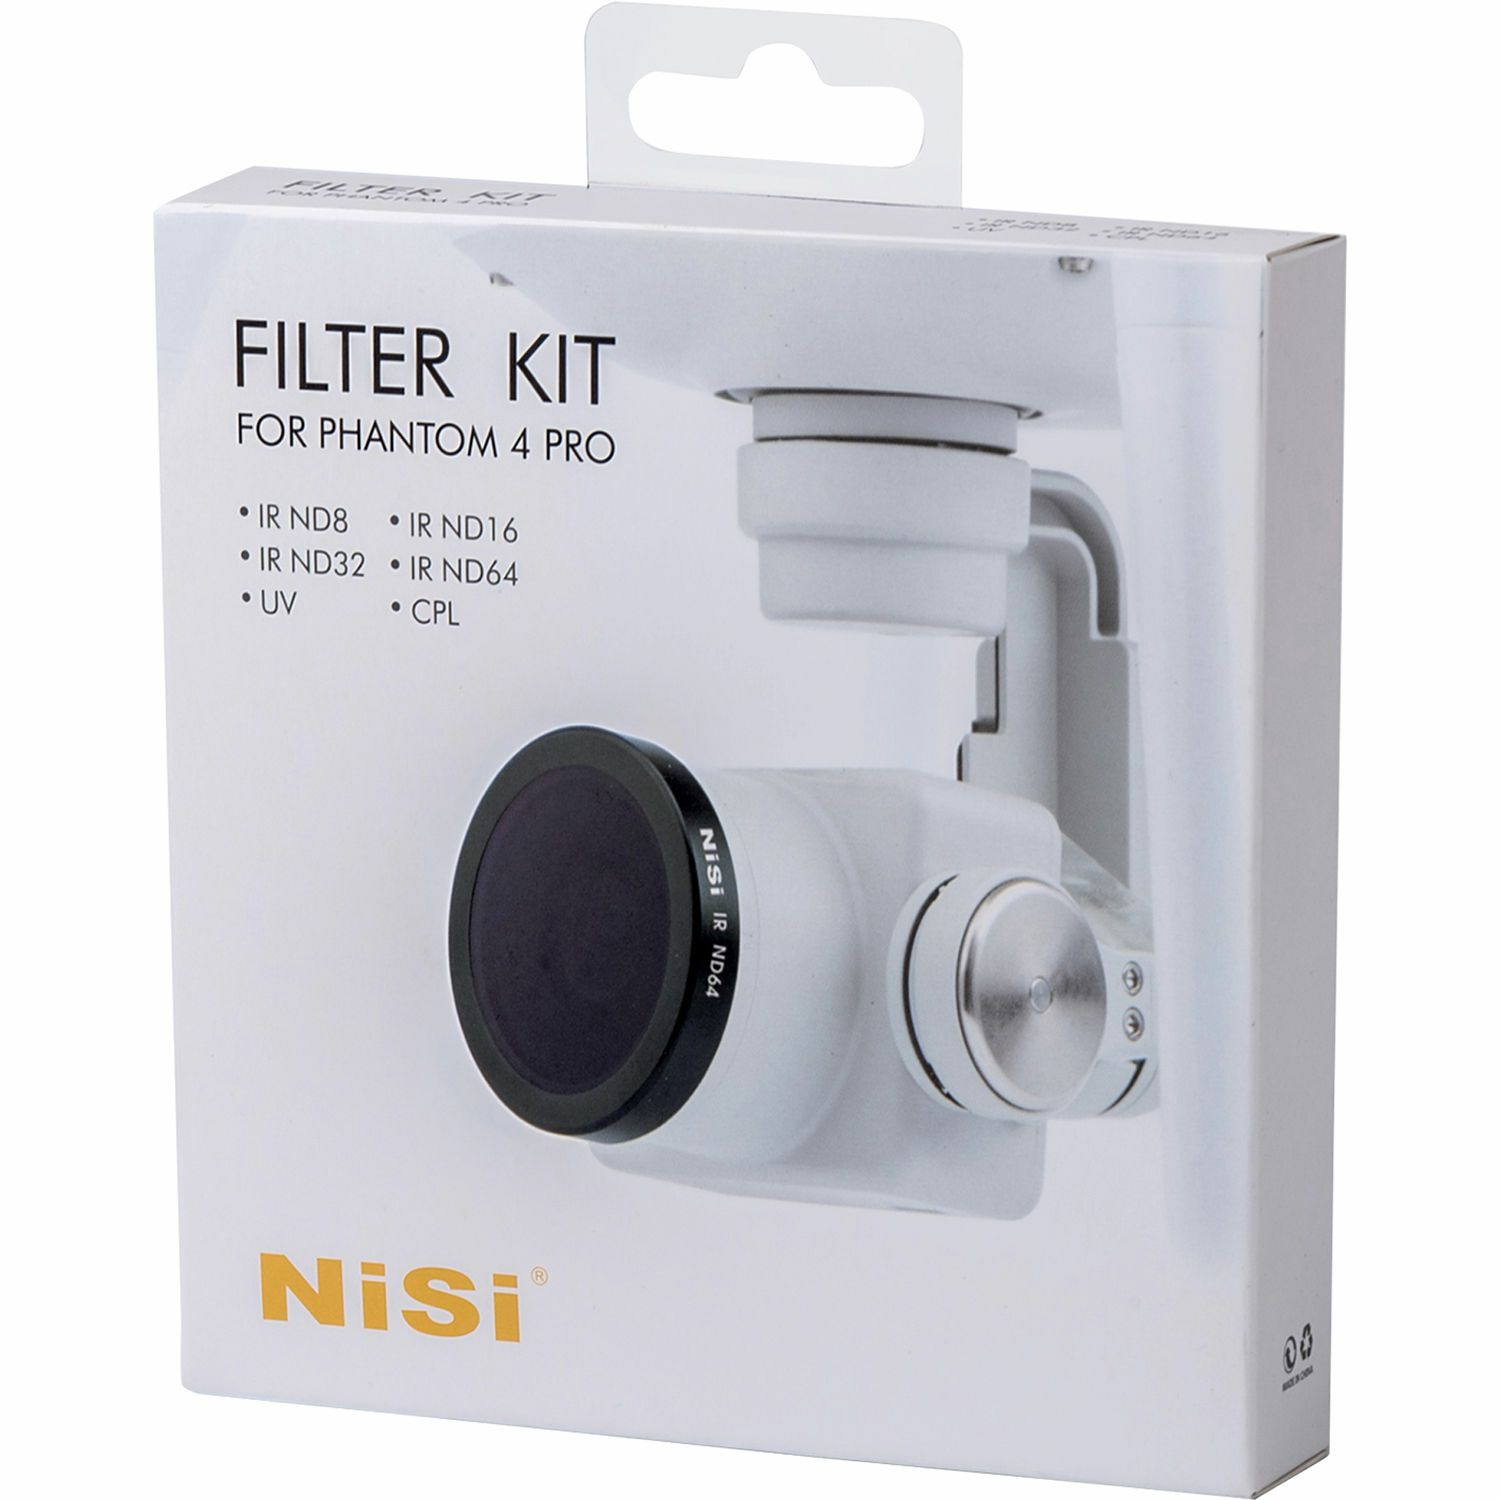 NiSi Filter KIT ND8 + ND16 + ND32 + ND64 + NC-UV + CPL for DJI Phantom 4 Pro